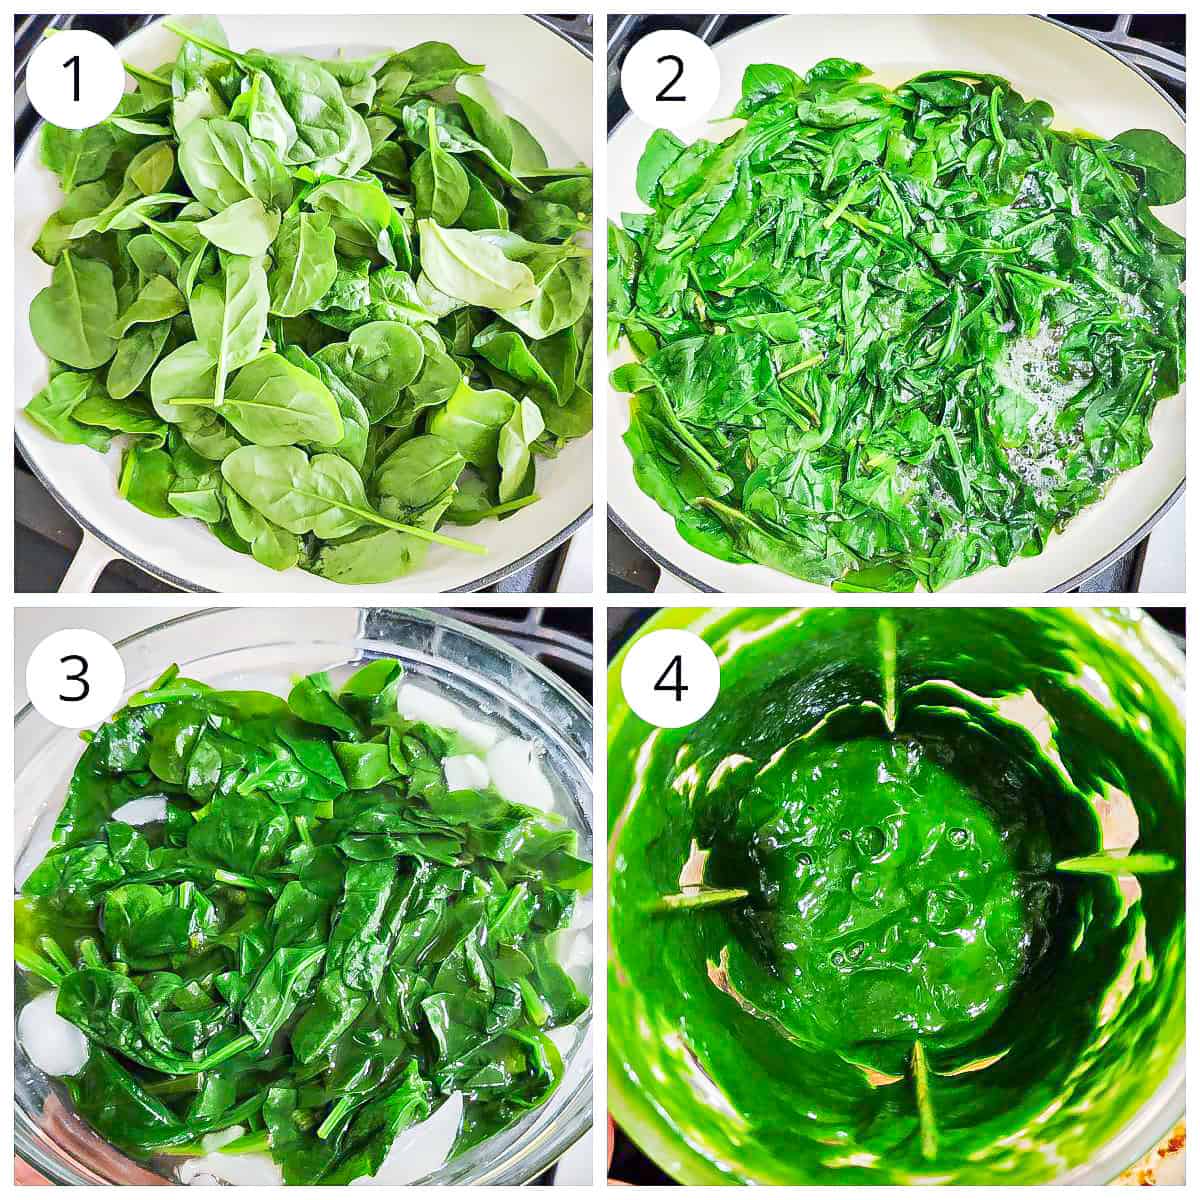 Making Spinach Puree for palak paneer